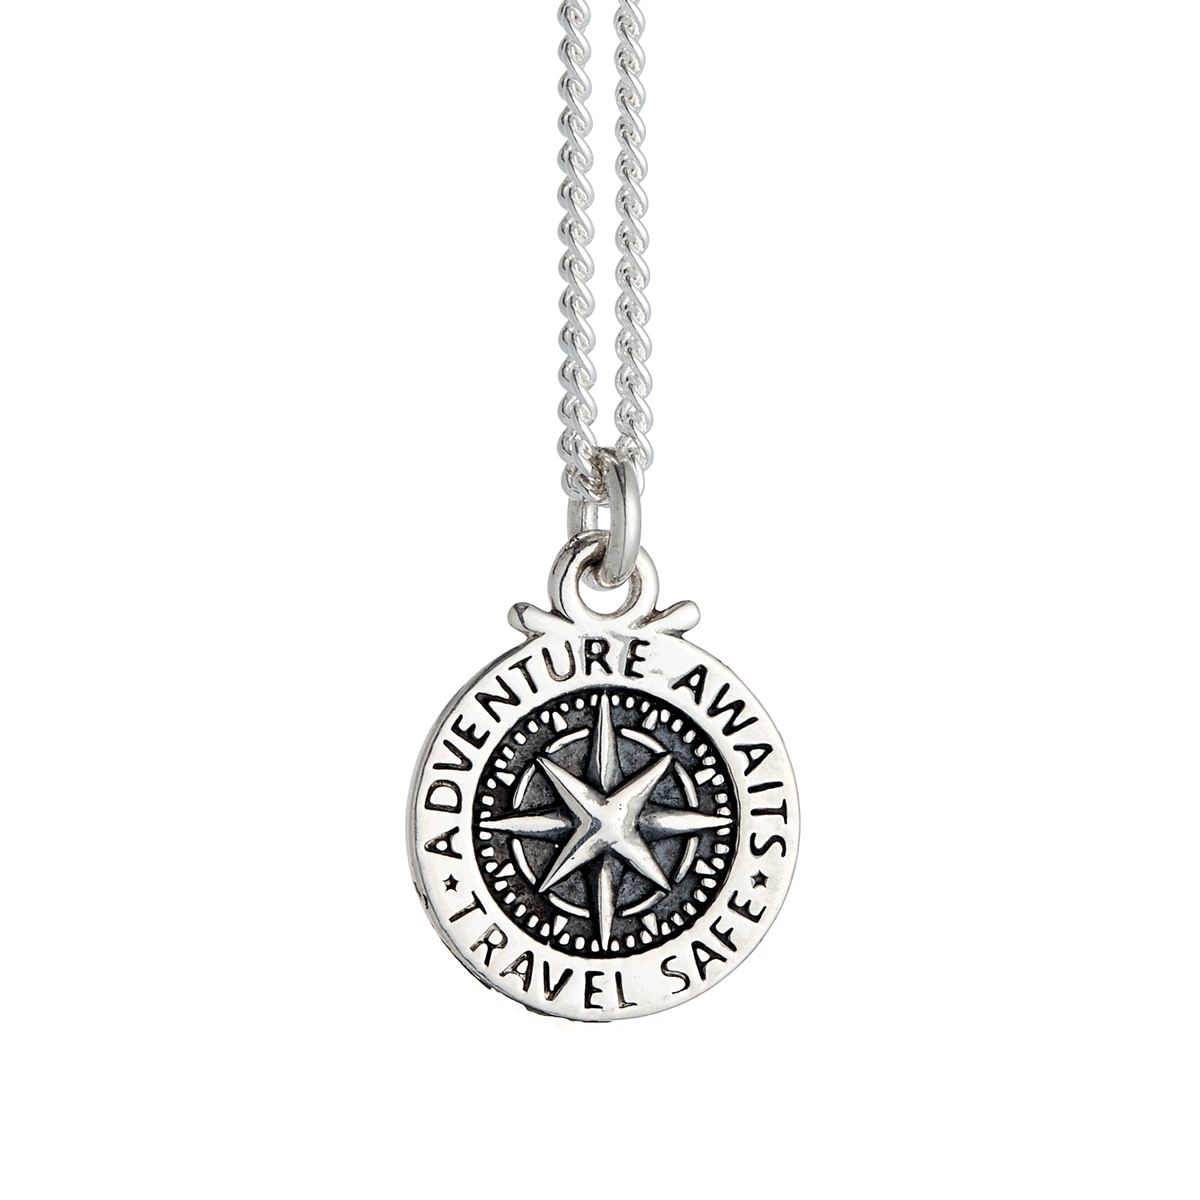 silver compass necklace travel safe adventure awaits